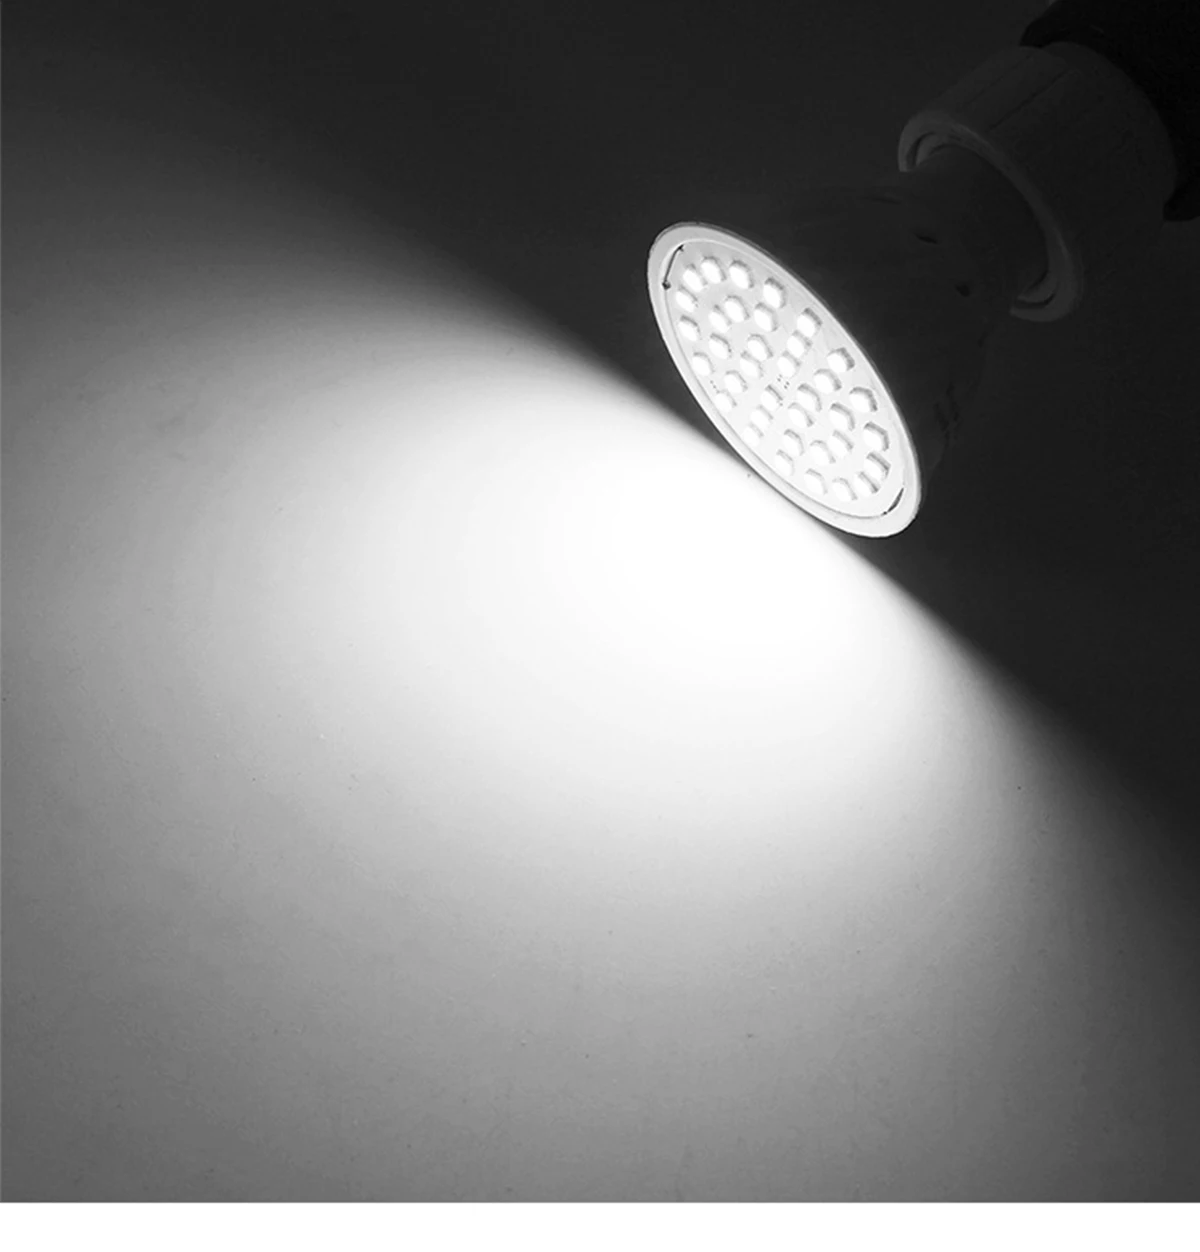 DIGAD E27 E14 MR16 GU10 лампада светодиодный лампы 220 в 240 Bombillas Светодиодный лампа Spotlight 48 60 80 светодиодный 2835 SMD Lampara пятно света Cfl